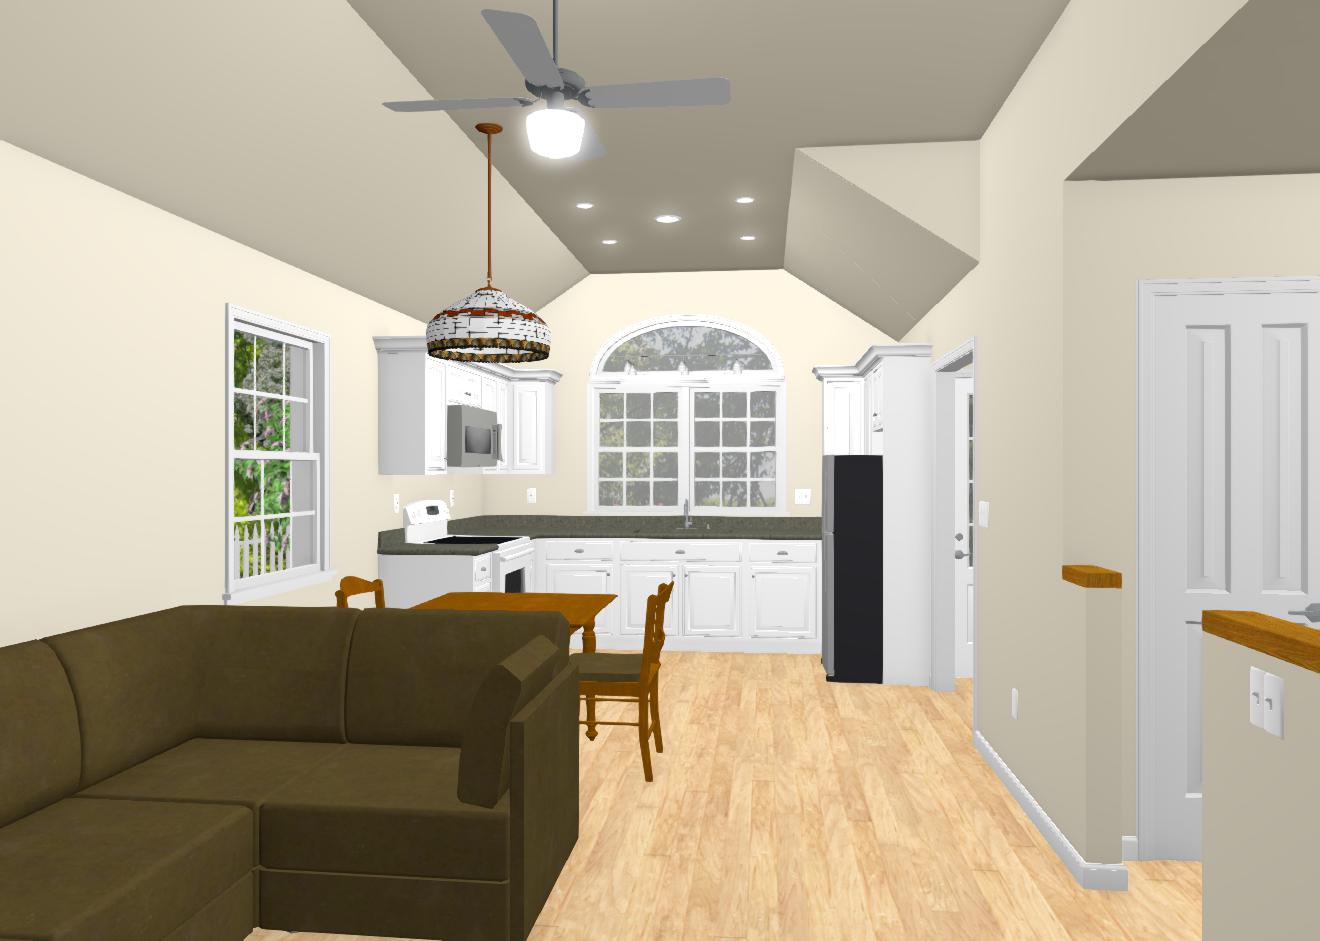 Ashland Cottage Plan - 528 sq. ft.